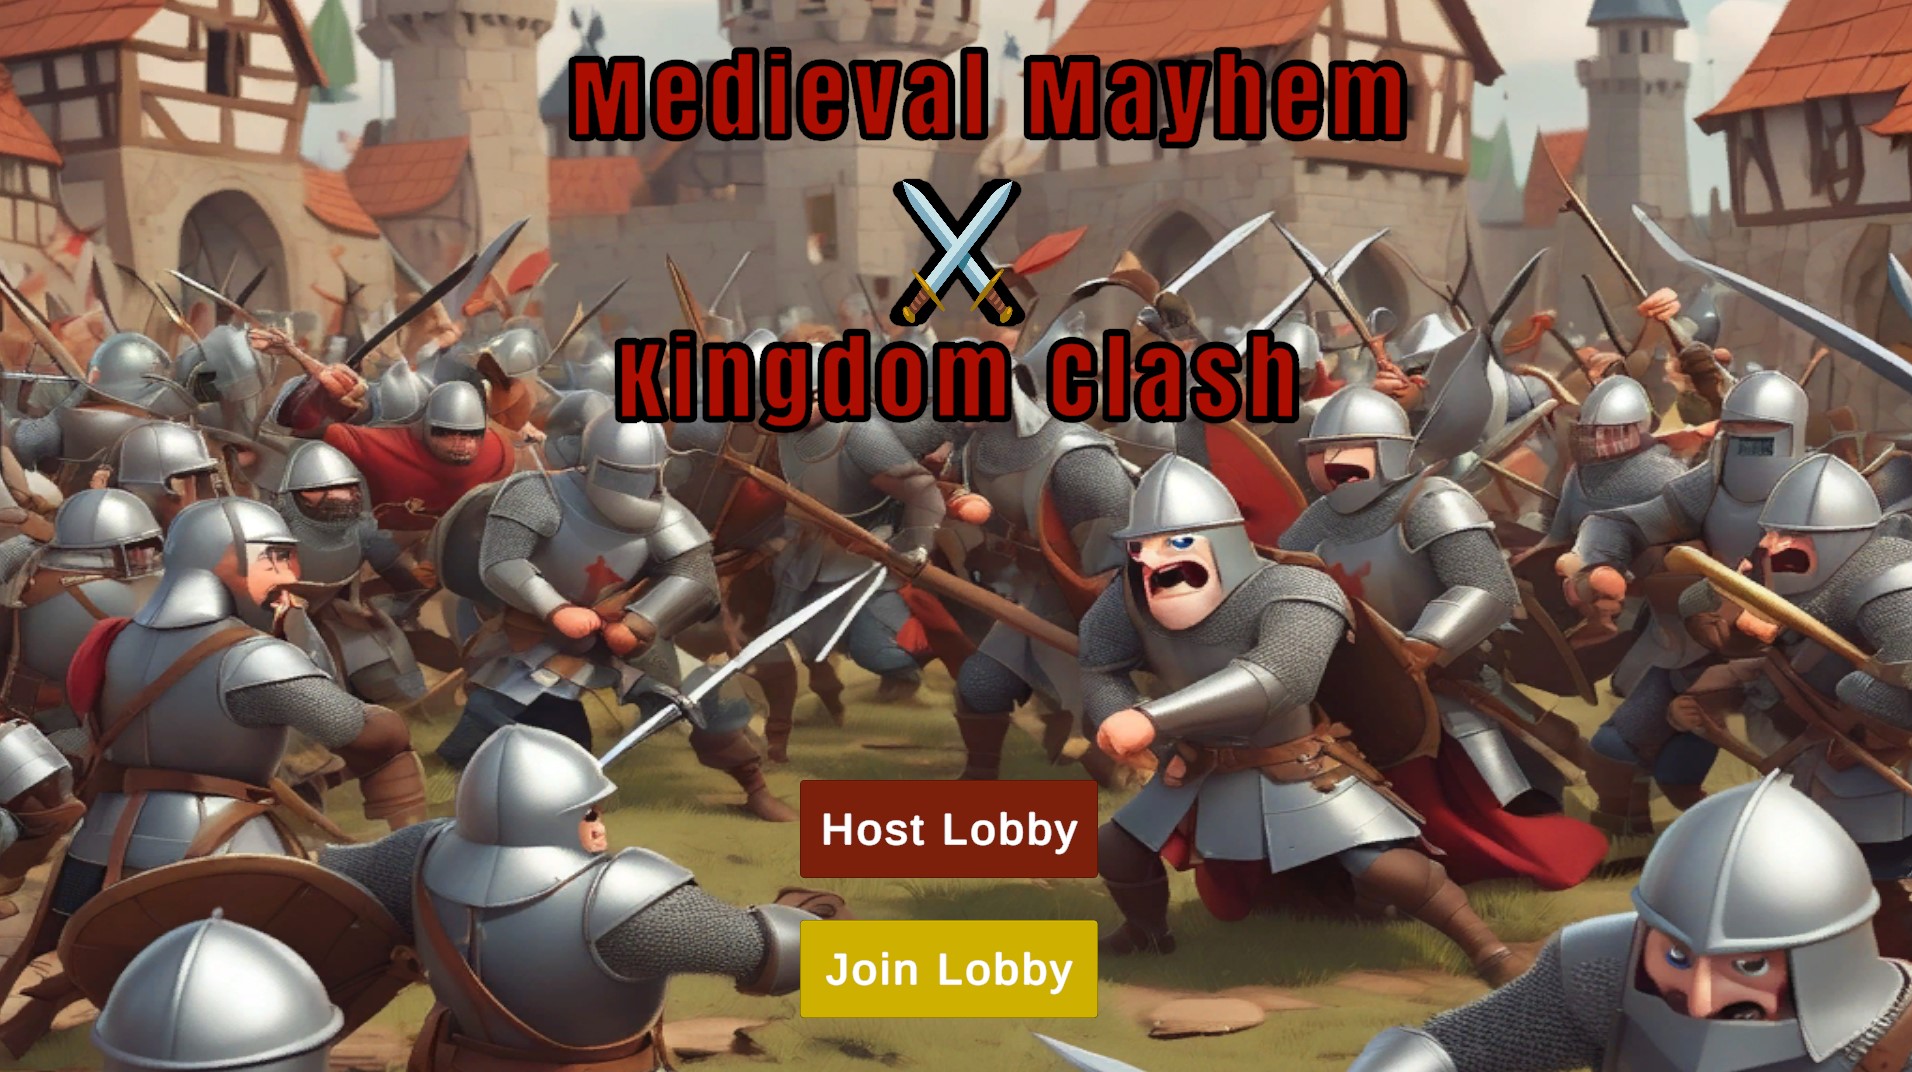 Medieval Mayhem X Kingdom Clash